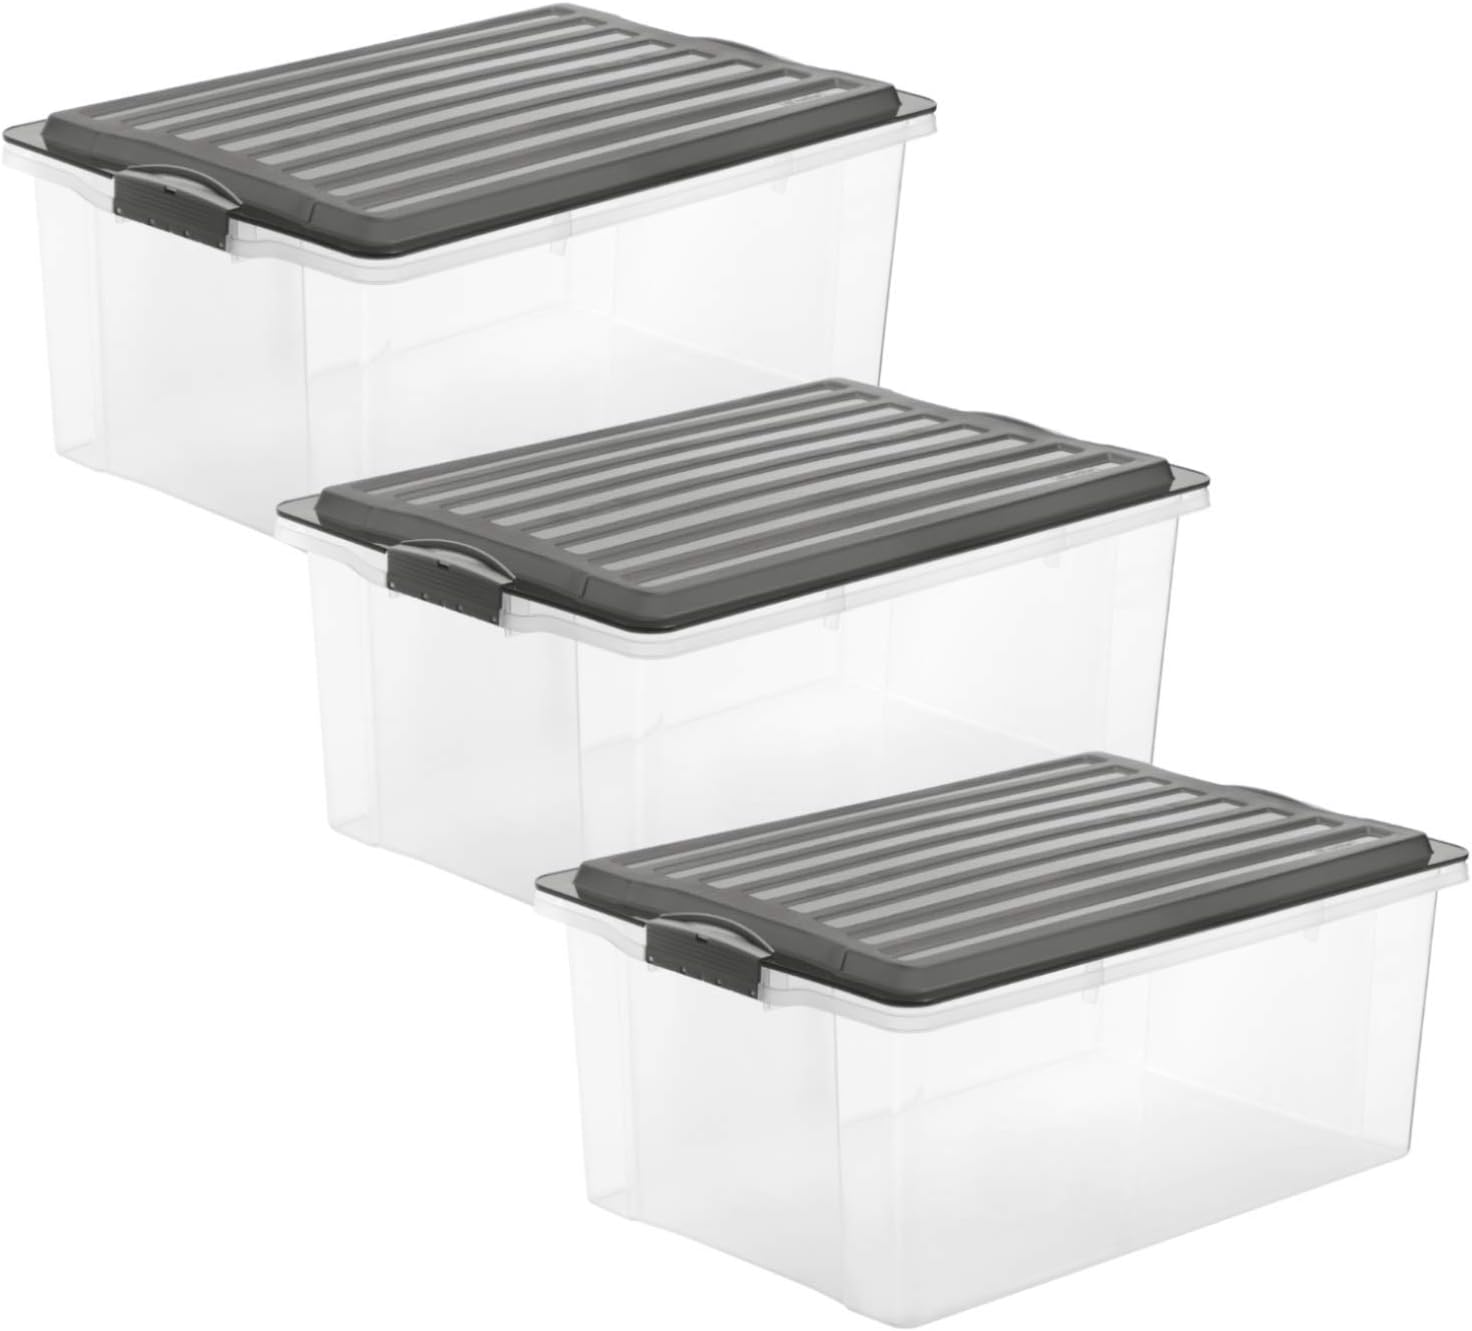 Rotho Compact 3er-Set Aufbewahrungsbox 38l mit Deckel, Kunststoff (PP) BPA-frei, anthrazit/transparent, 3x38l (57,5 x 40,0 x 25,0 cm)